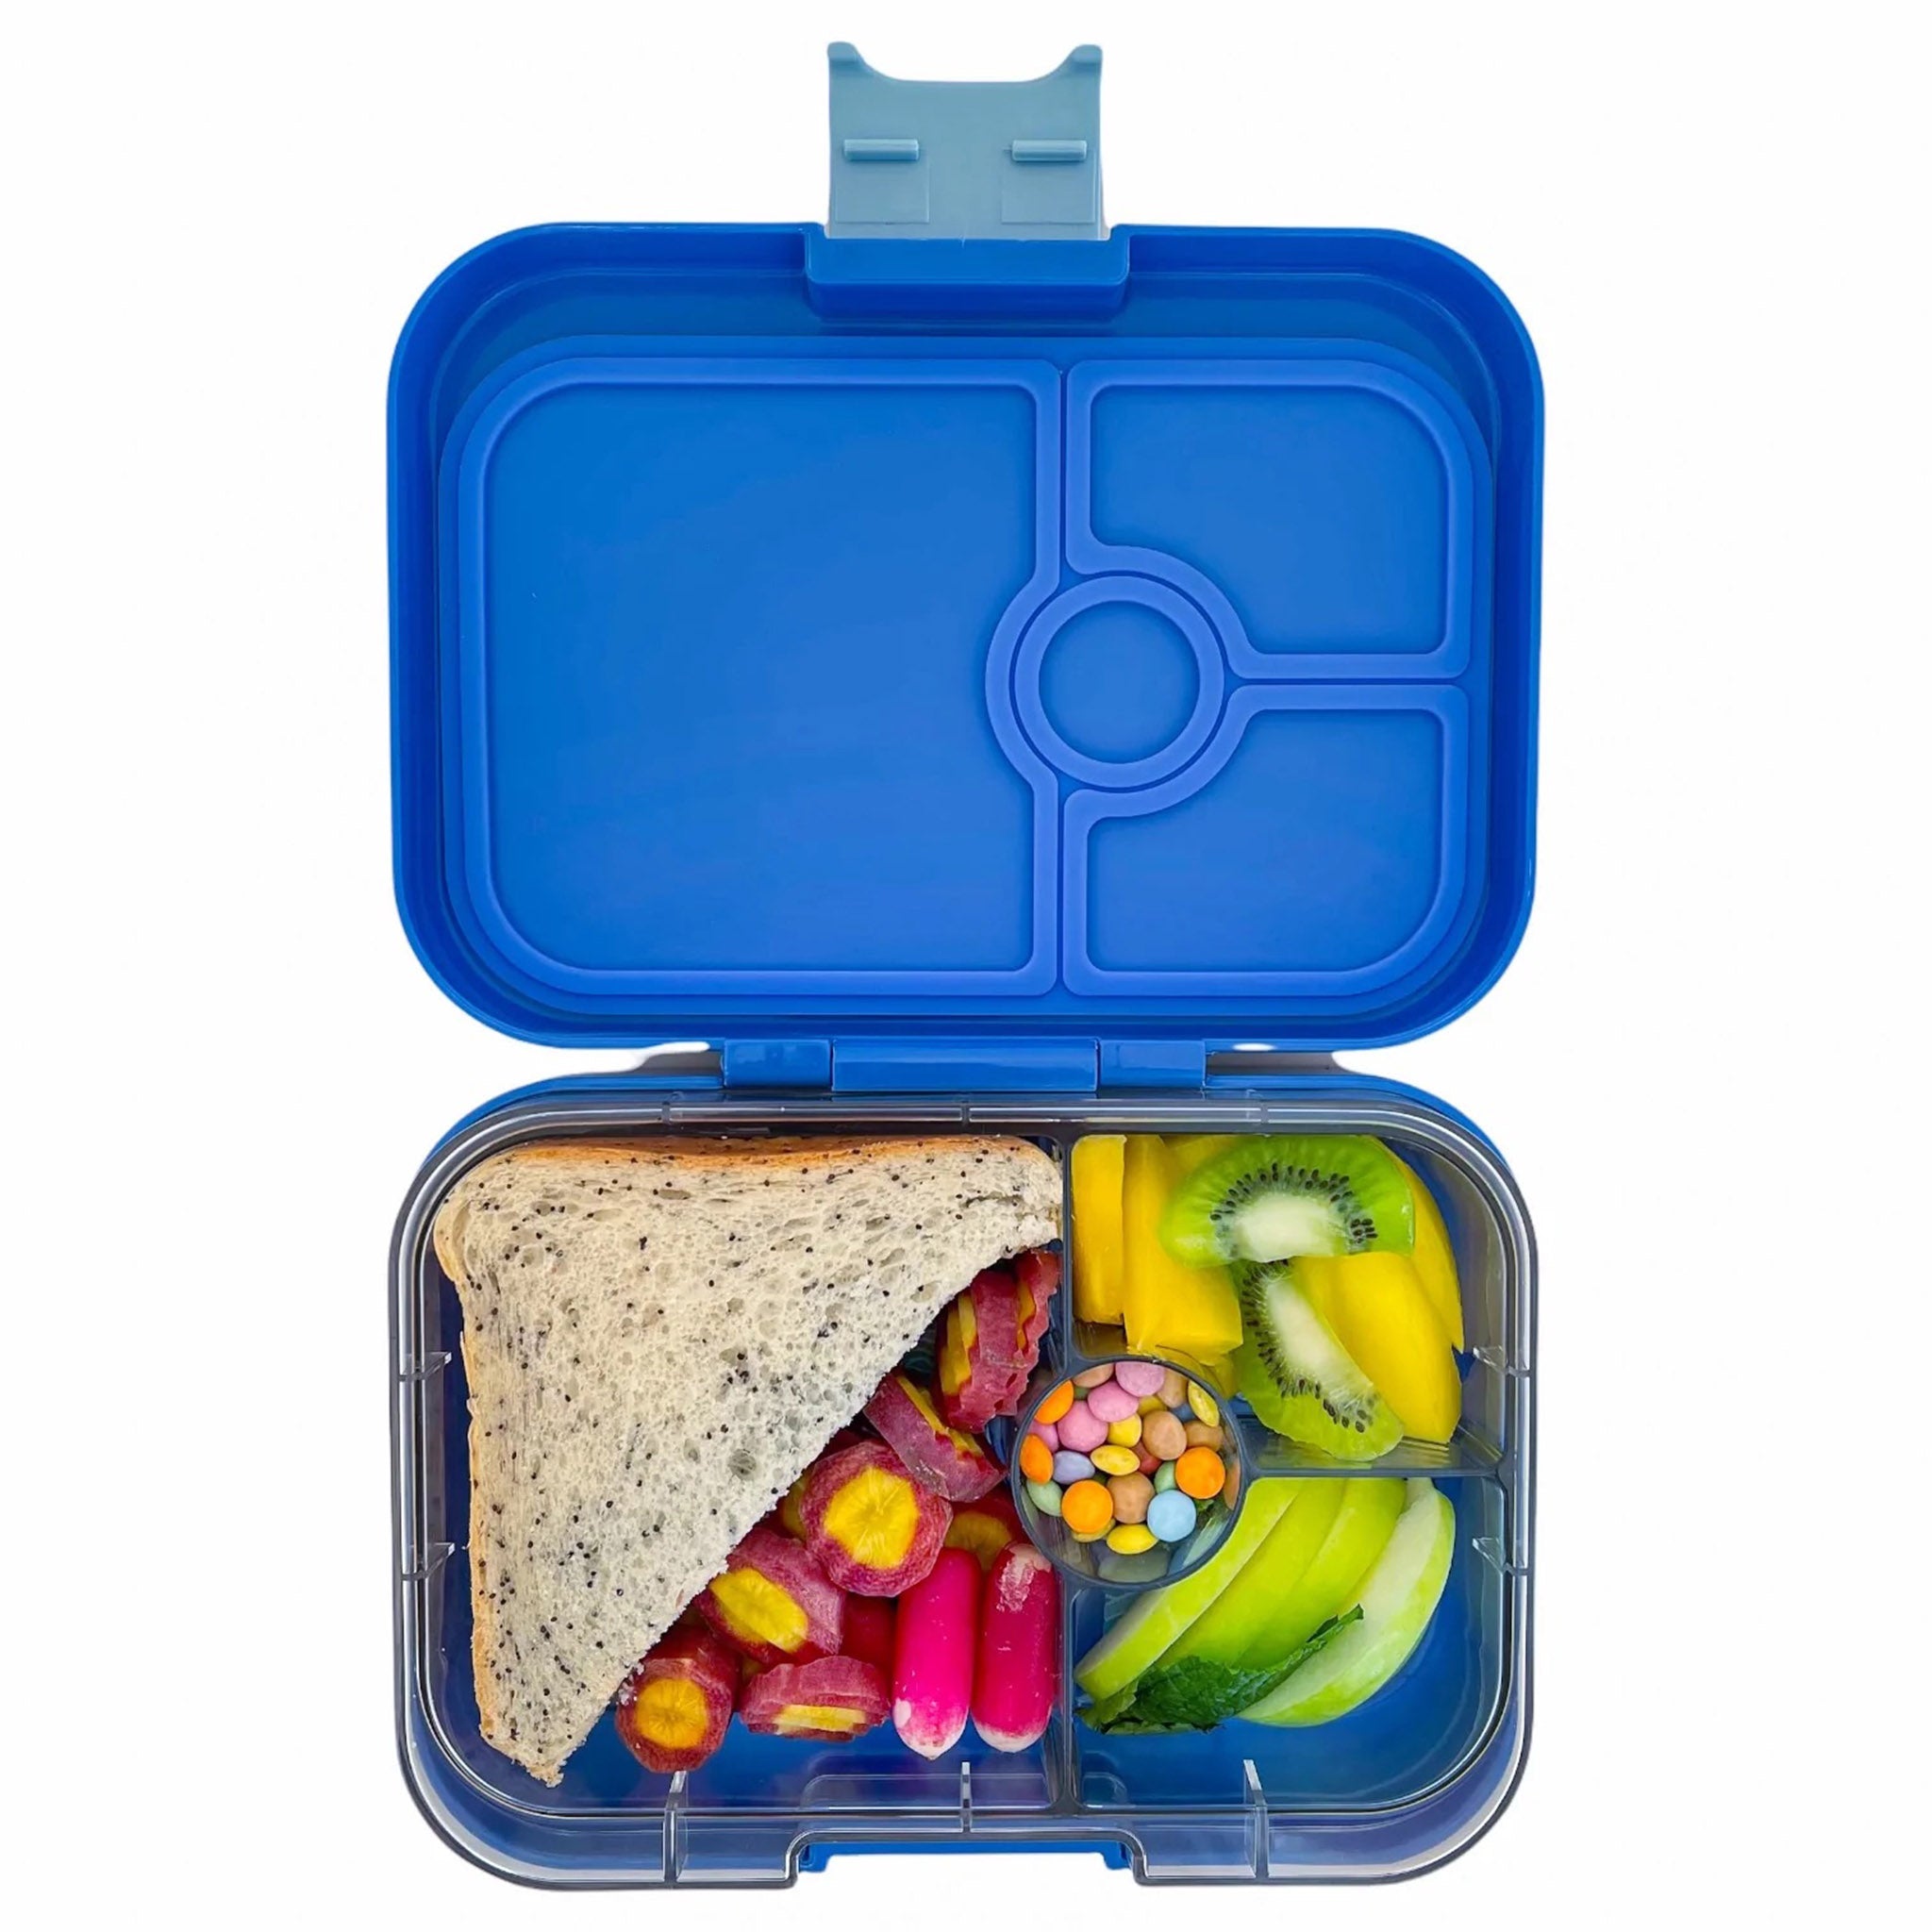 Yumbox Panino Lila Purple 4 Compartment Lunch Box - Mighty Rabbit